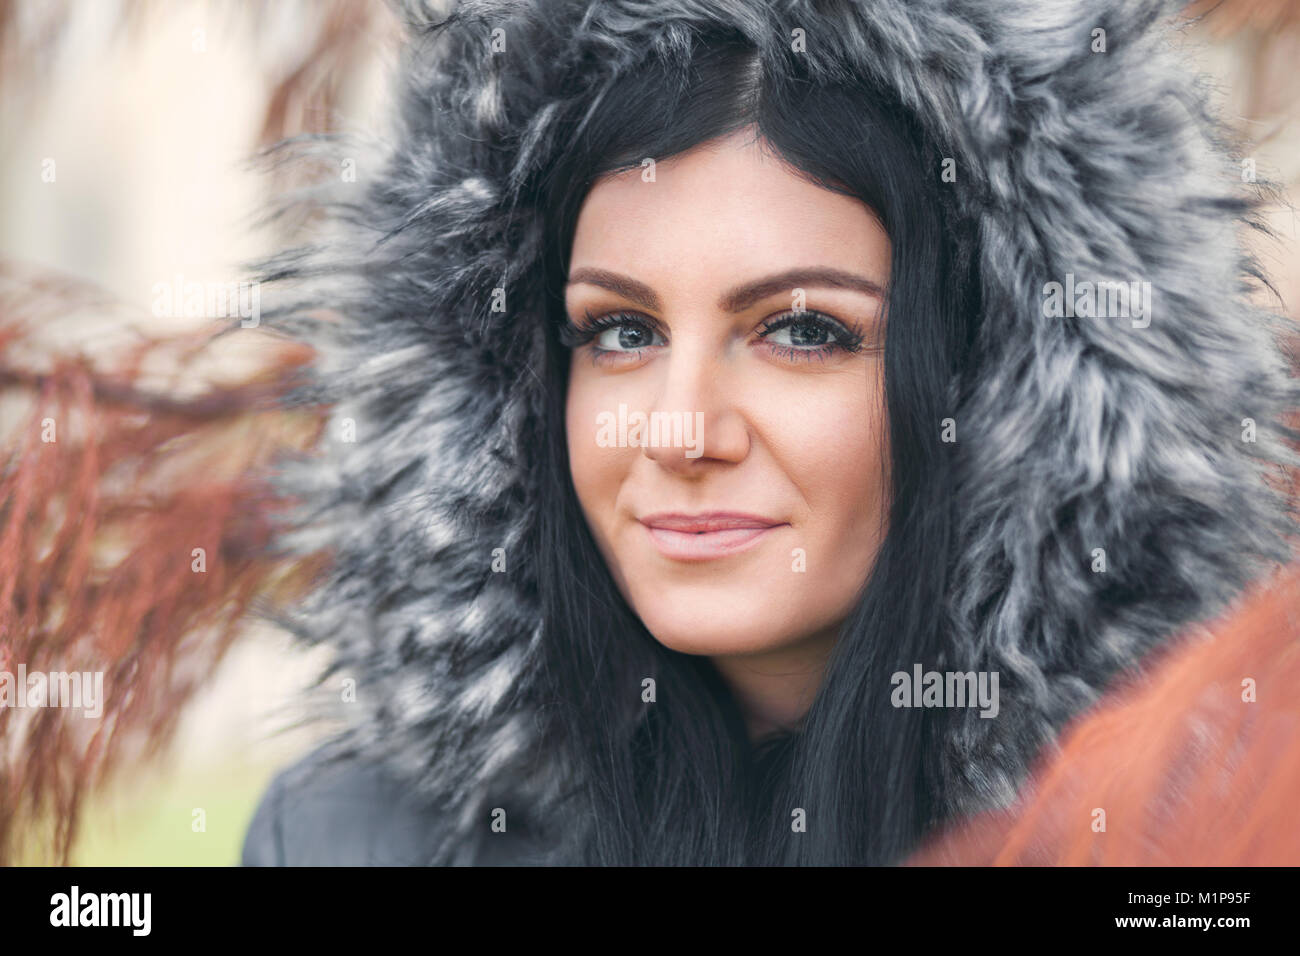 Schöne junge Frau trägt ein Fell kapuze Wintermantel Stockfotografie - Alamy